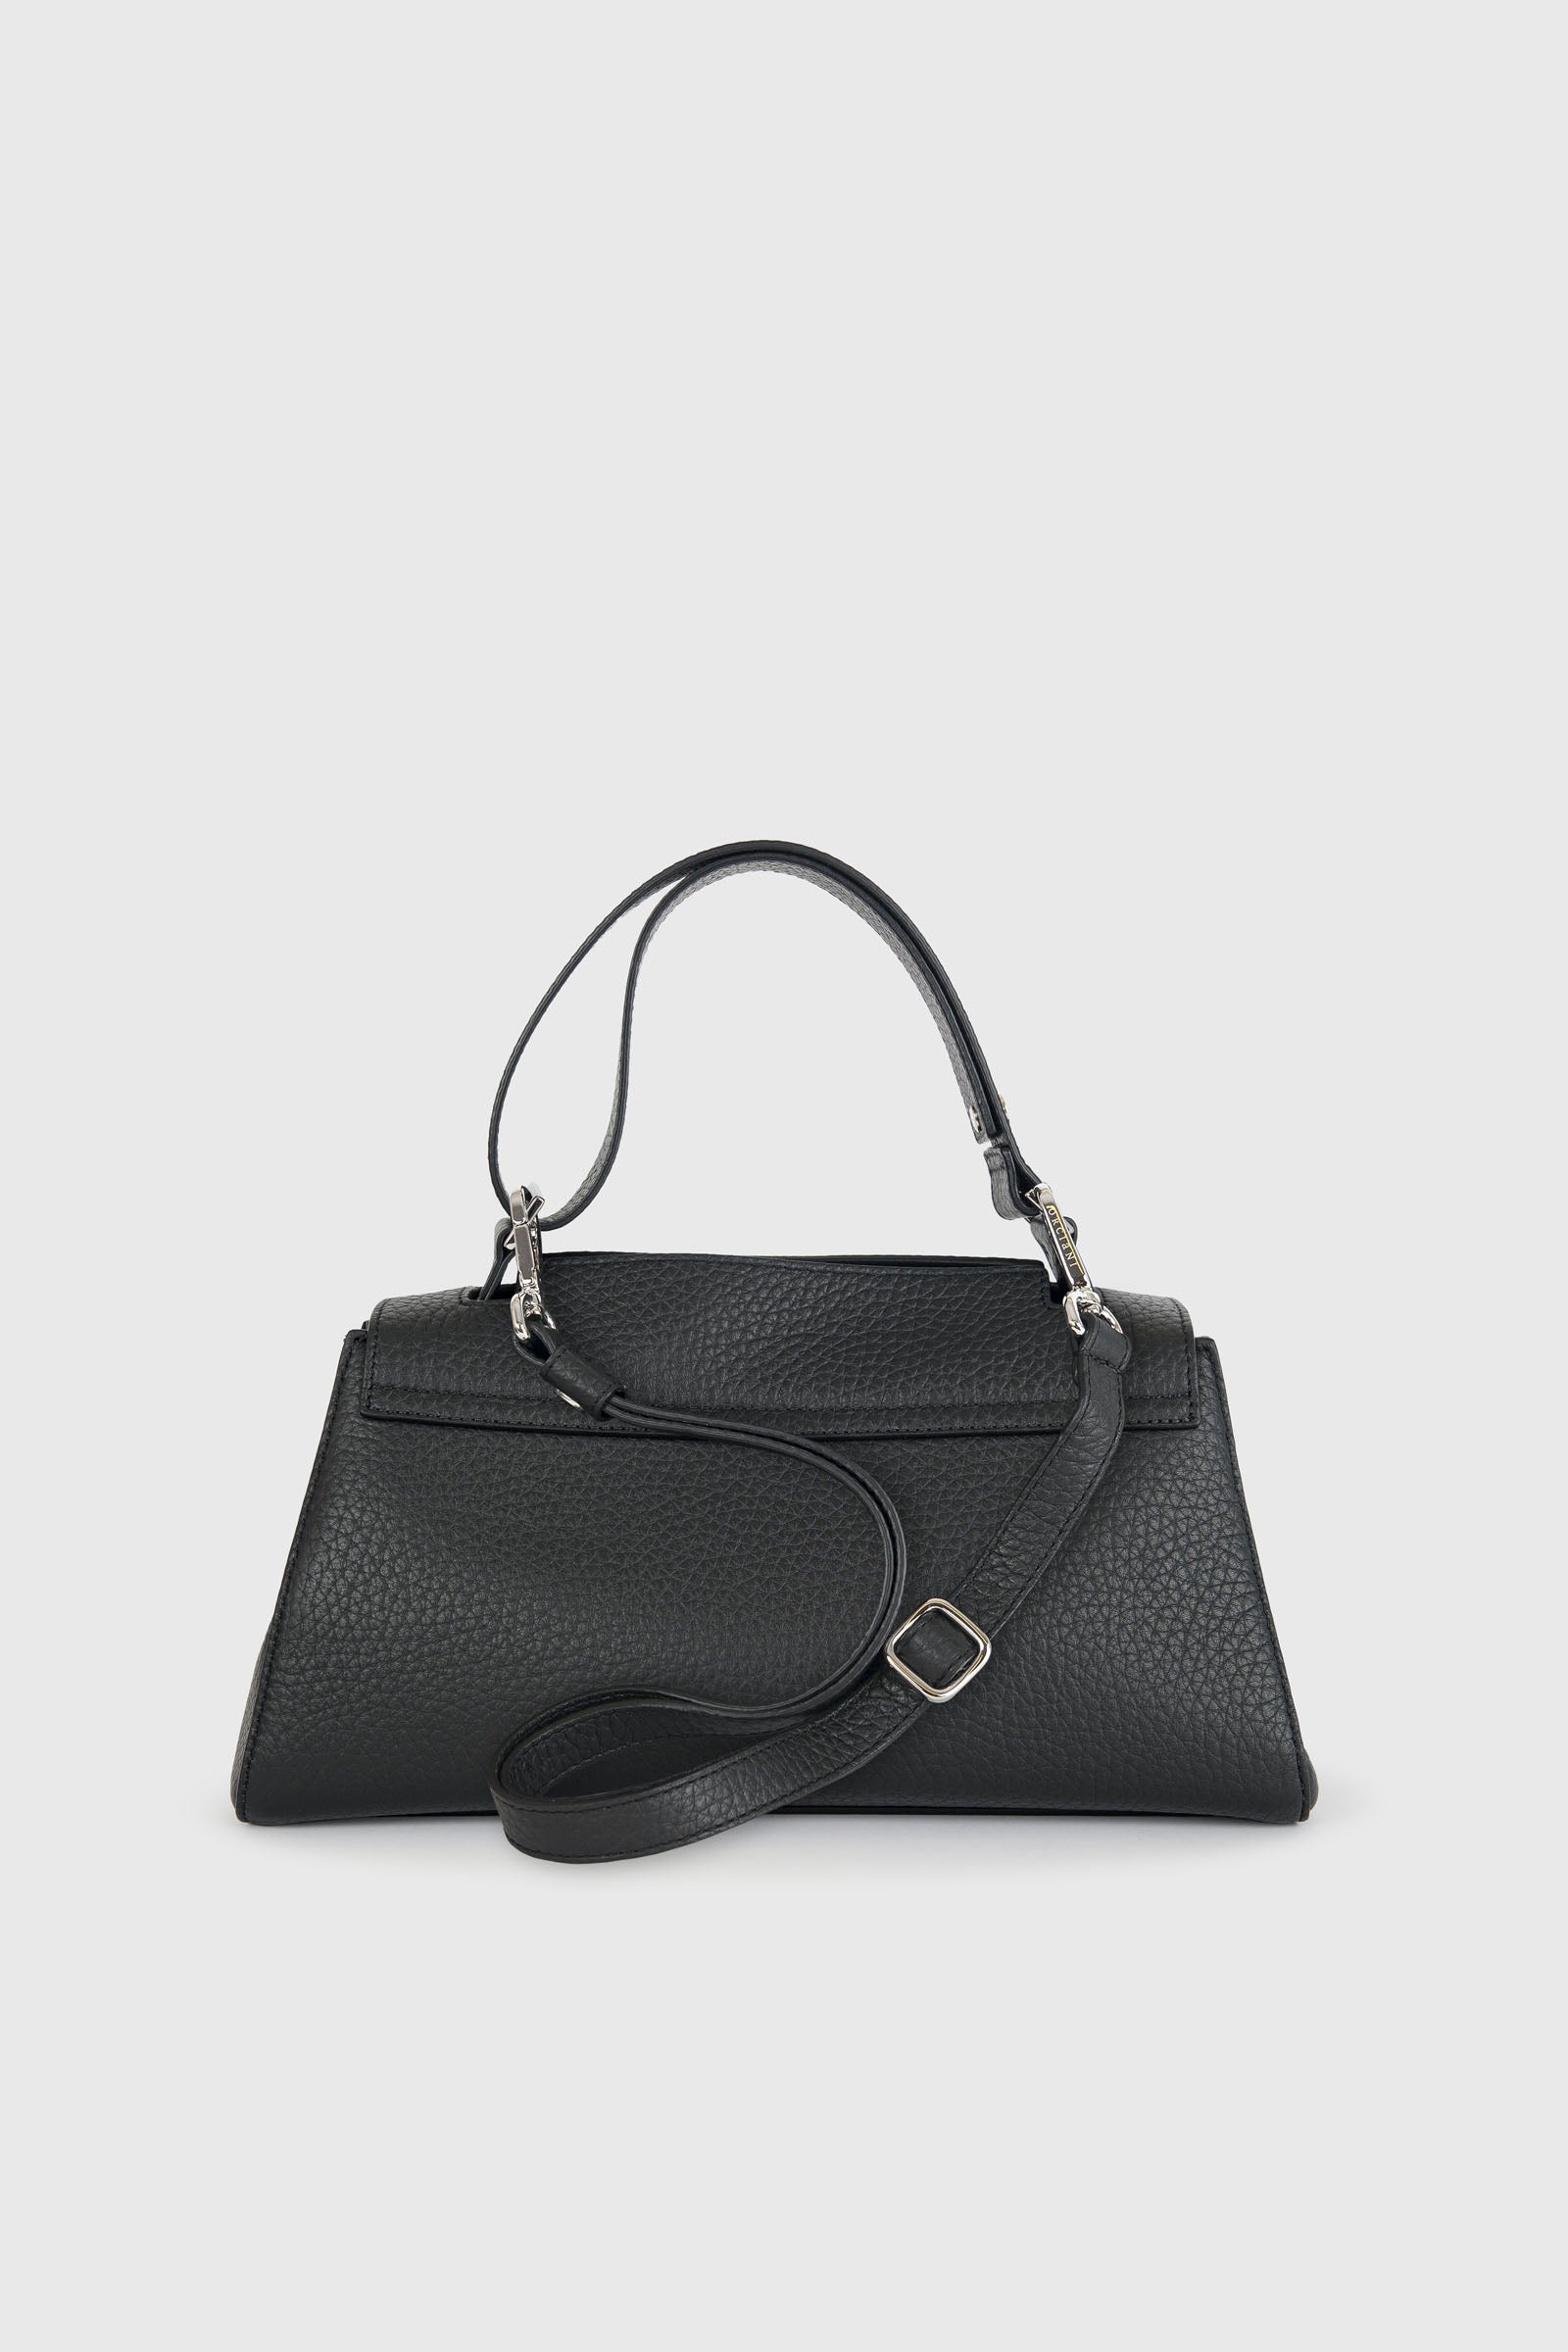 Orciani Sveva Longuette Soft Black Leather Bag - 3